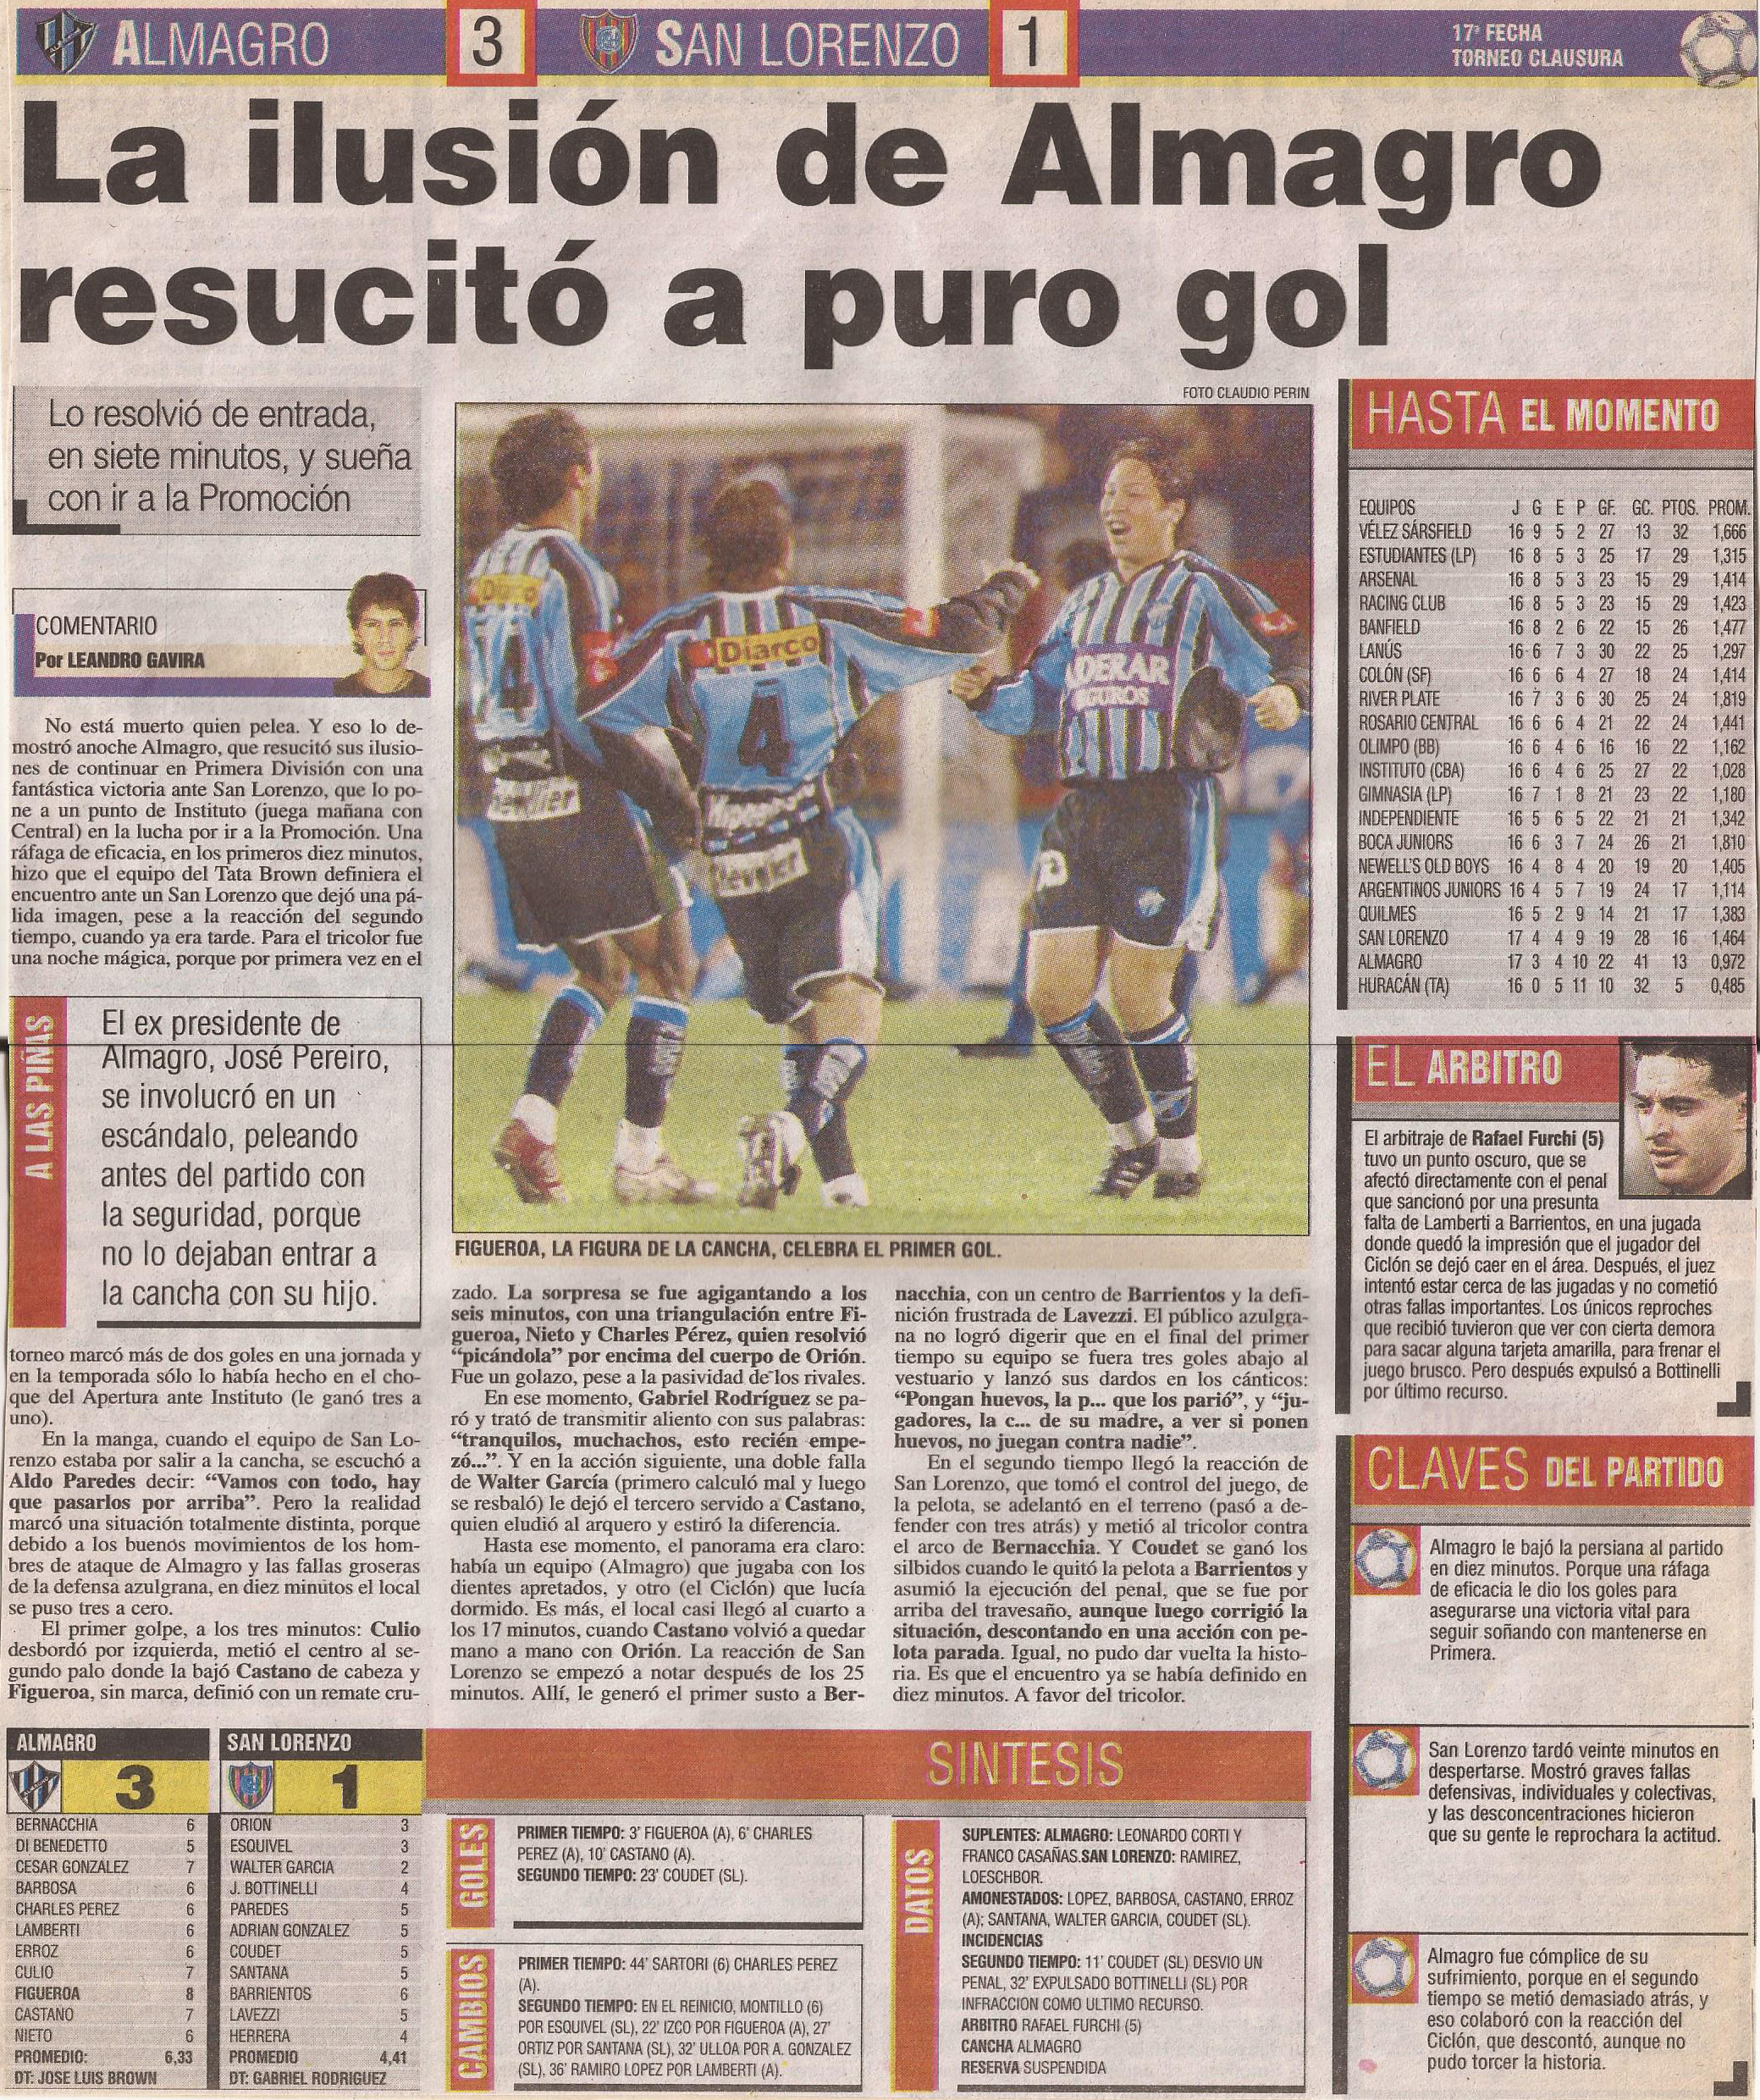 2004-05 Primera Division - Almagro vs San Lorezo - Diario Popular